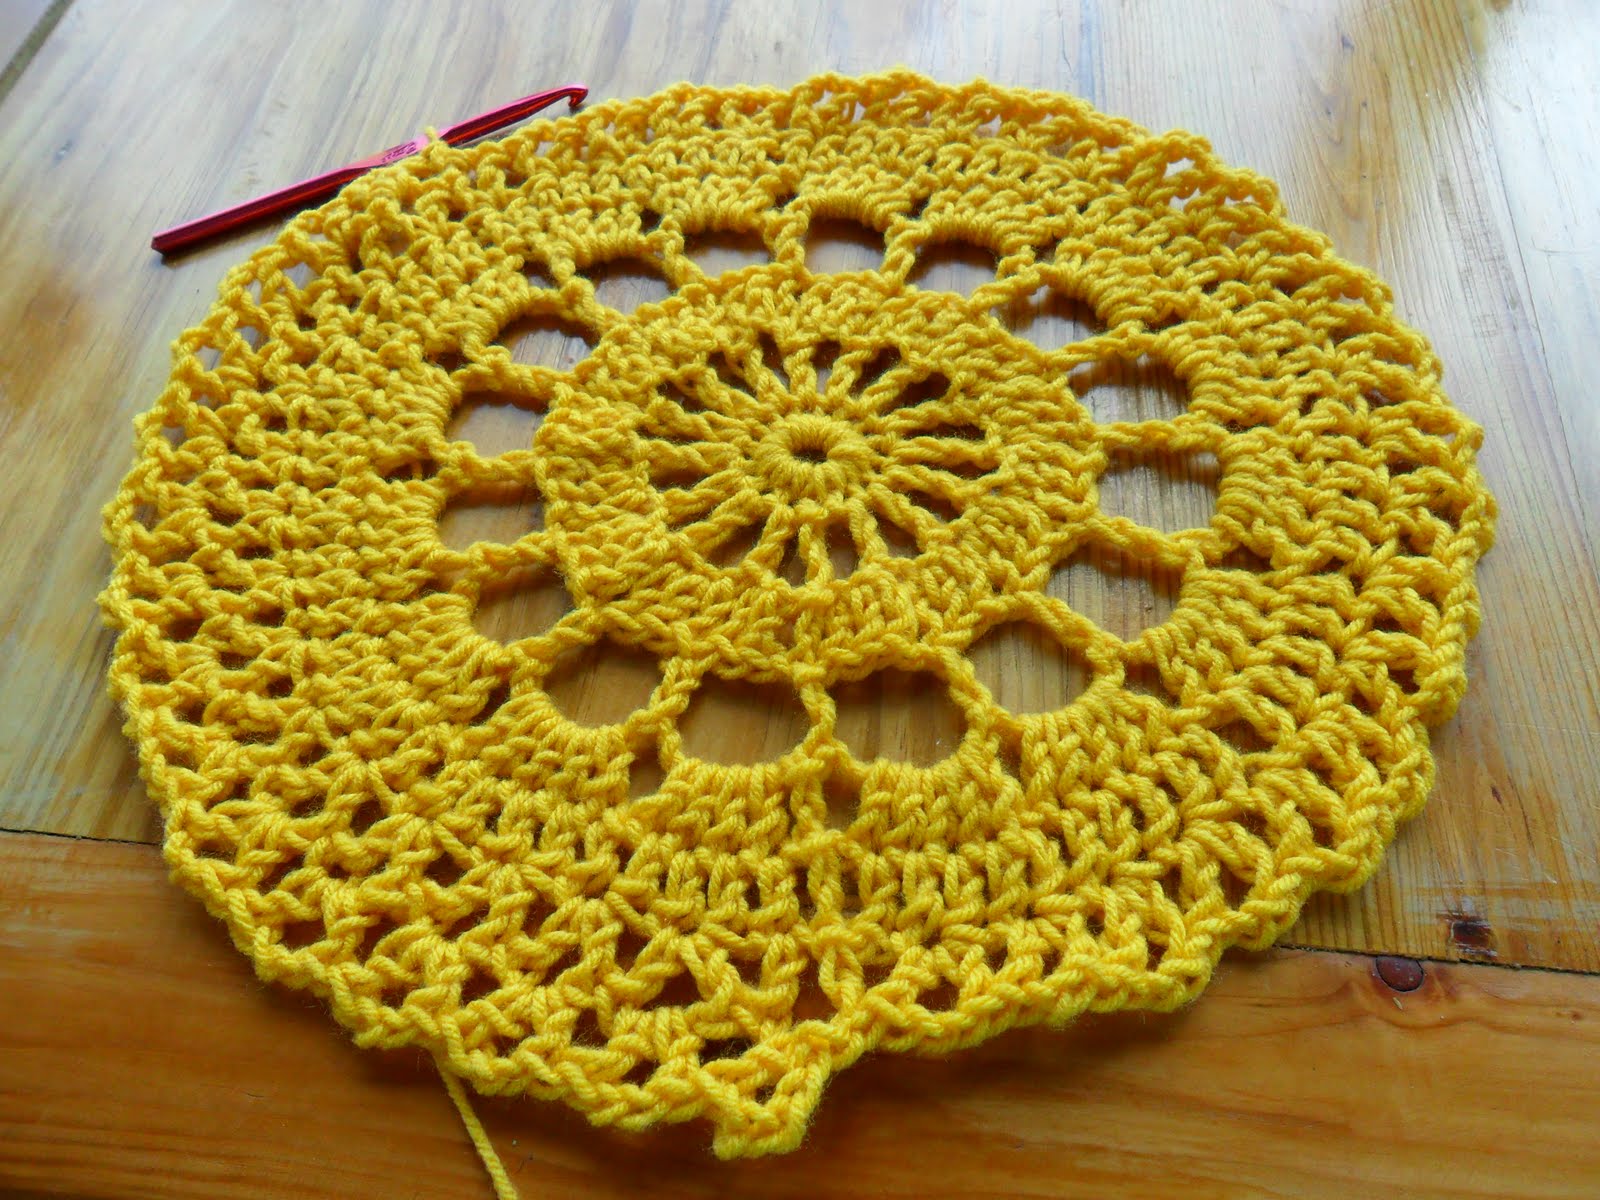 Crochet circular